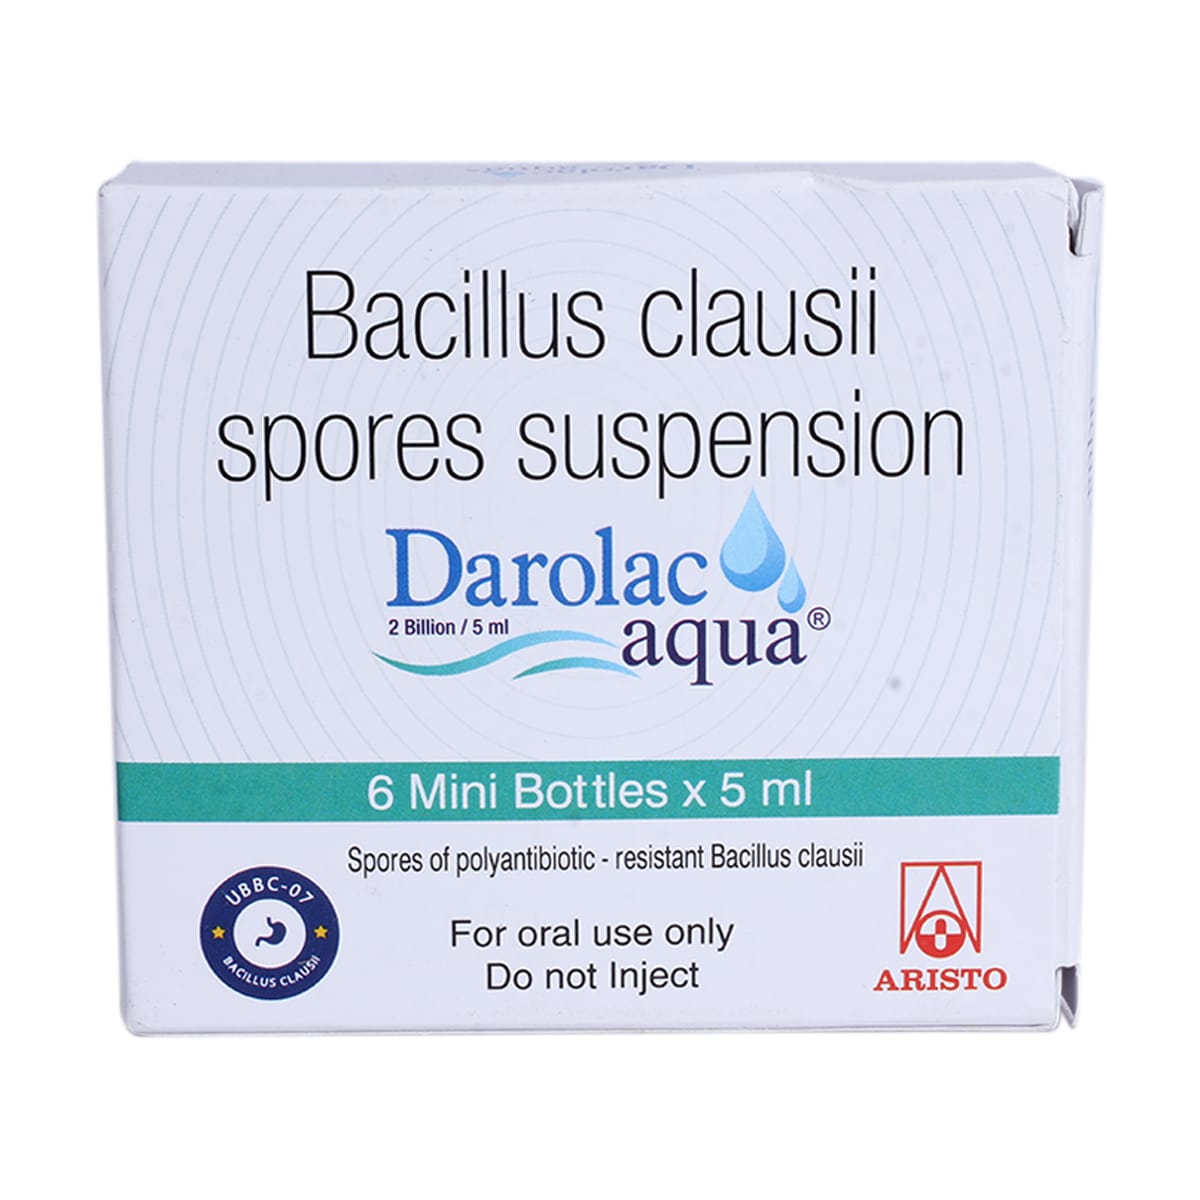 Buy Darolac Aqua Suspension 5 ml Online